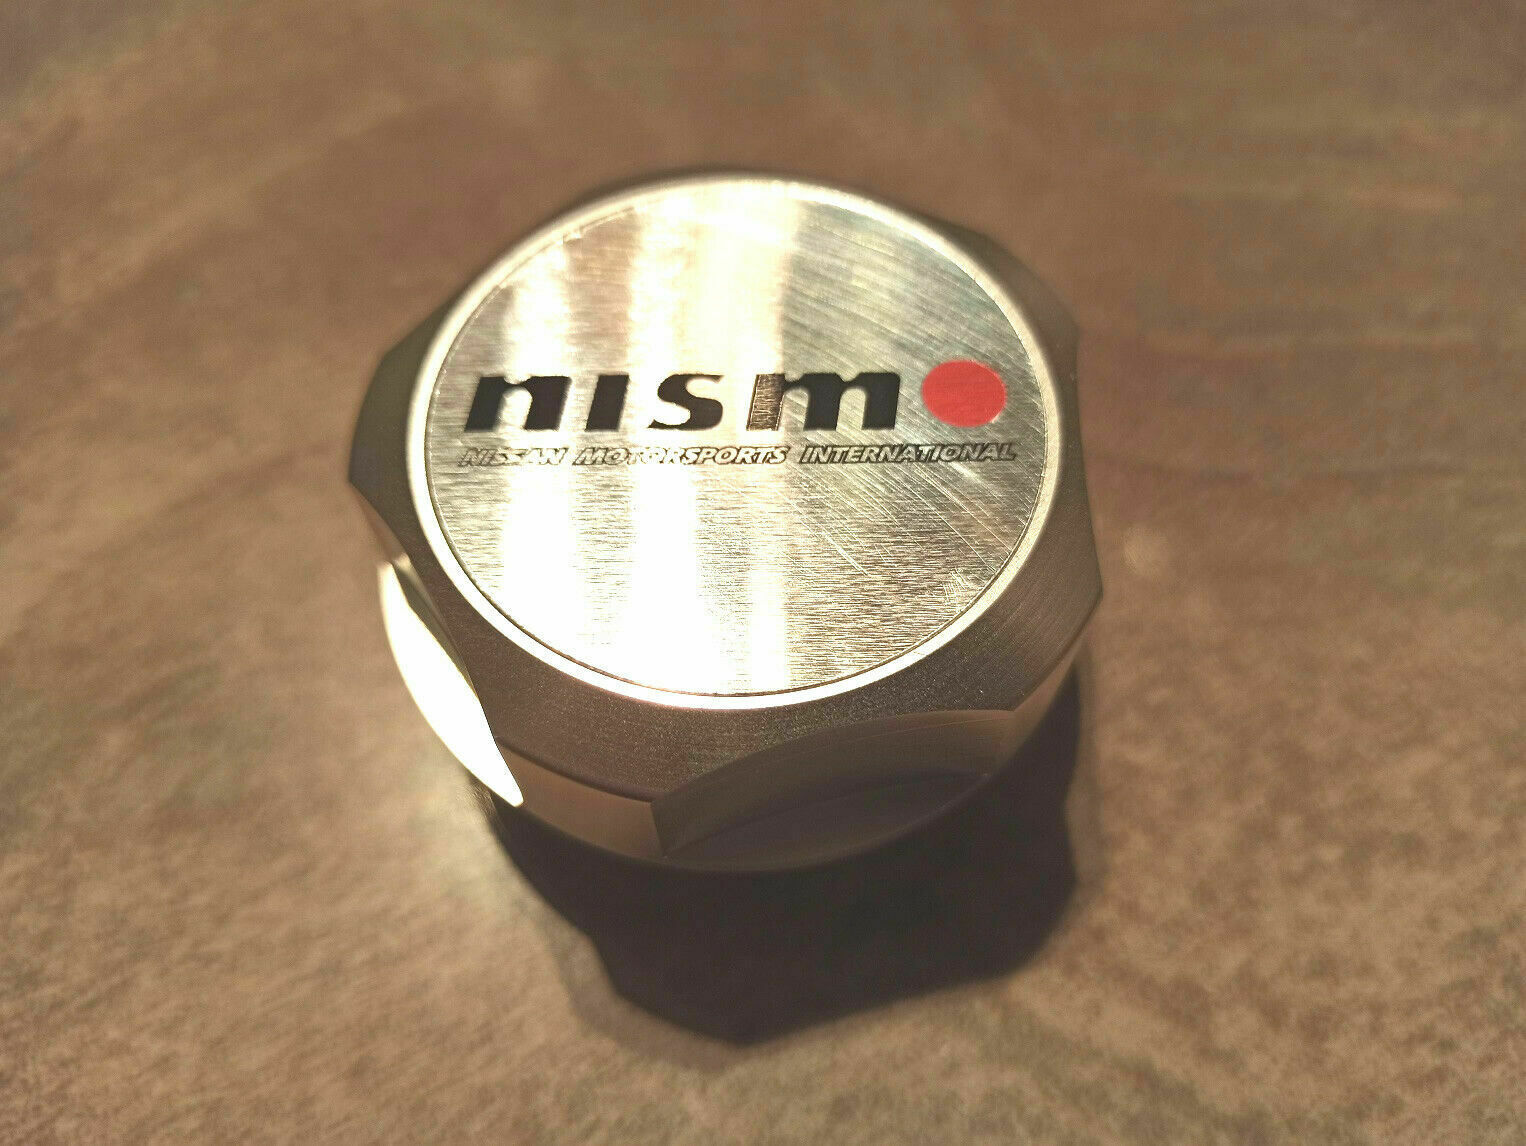 JDM NISMO FORGED Aluminium OIL FILLER CAP NISSAN 350Z 370Z infinity G35 G37 R34